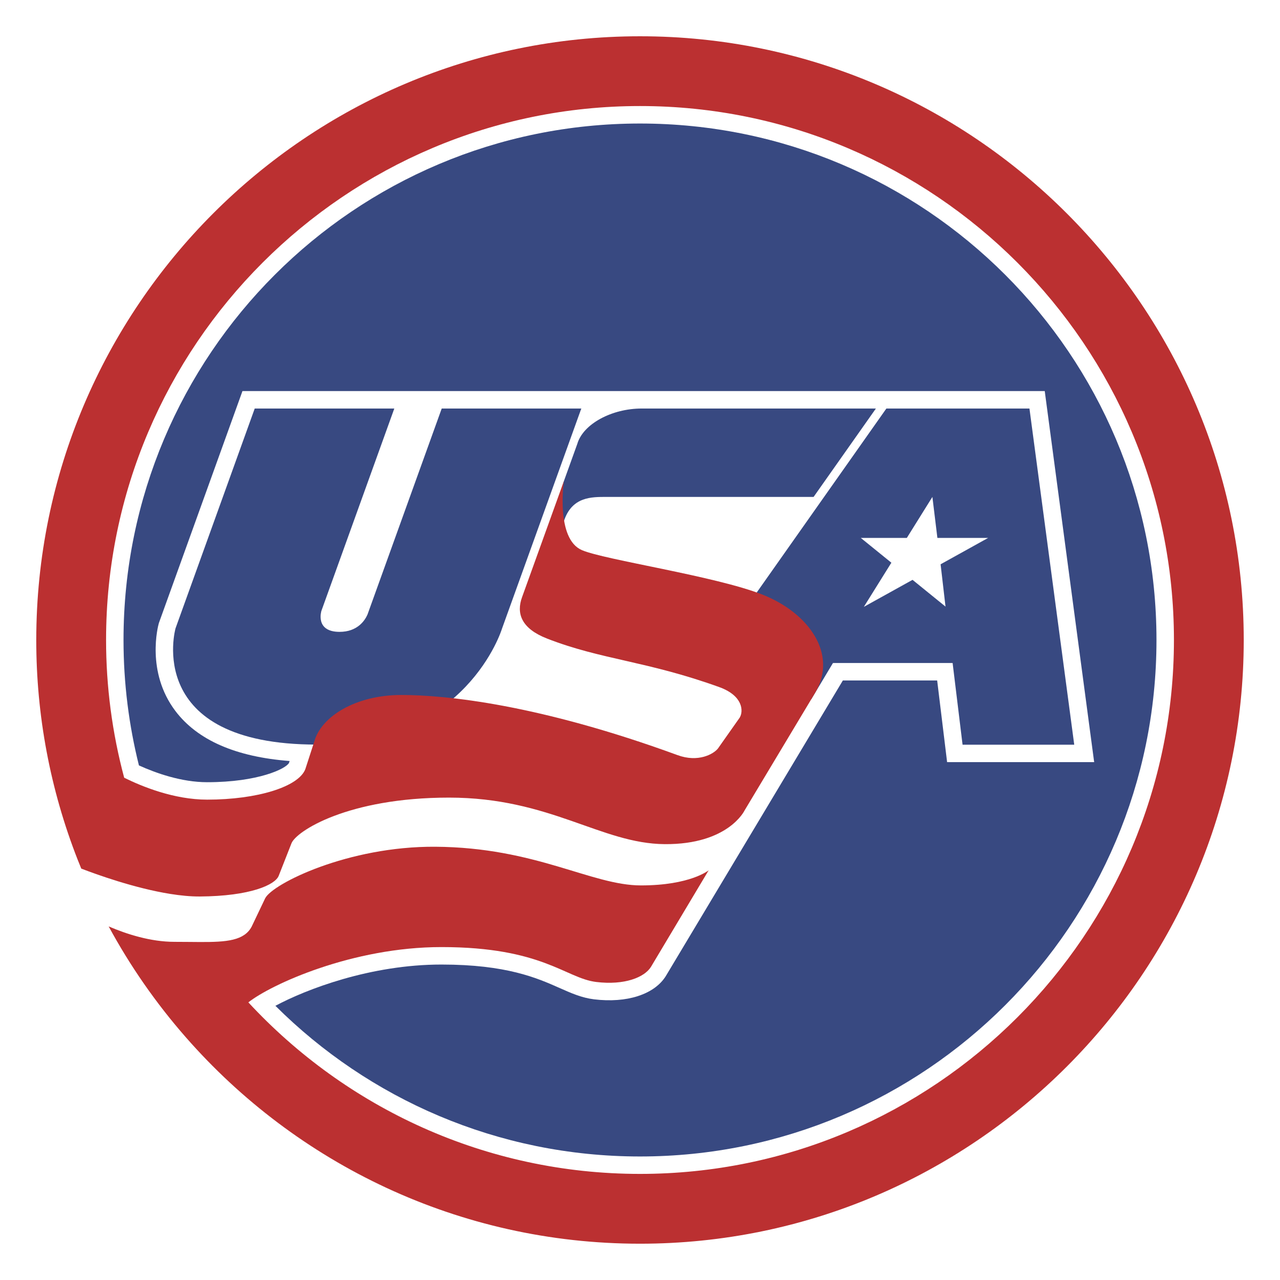 United States National Program